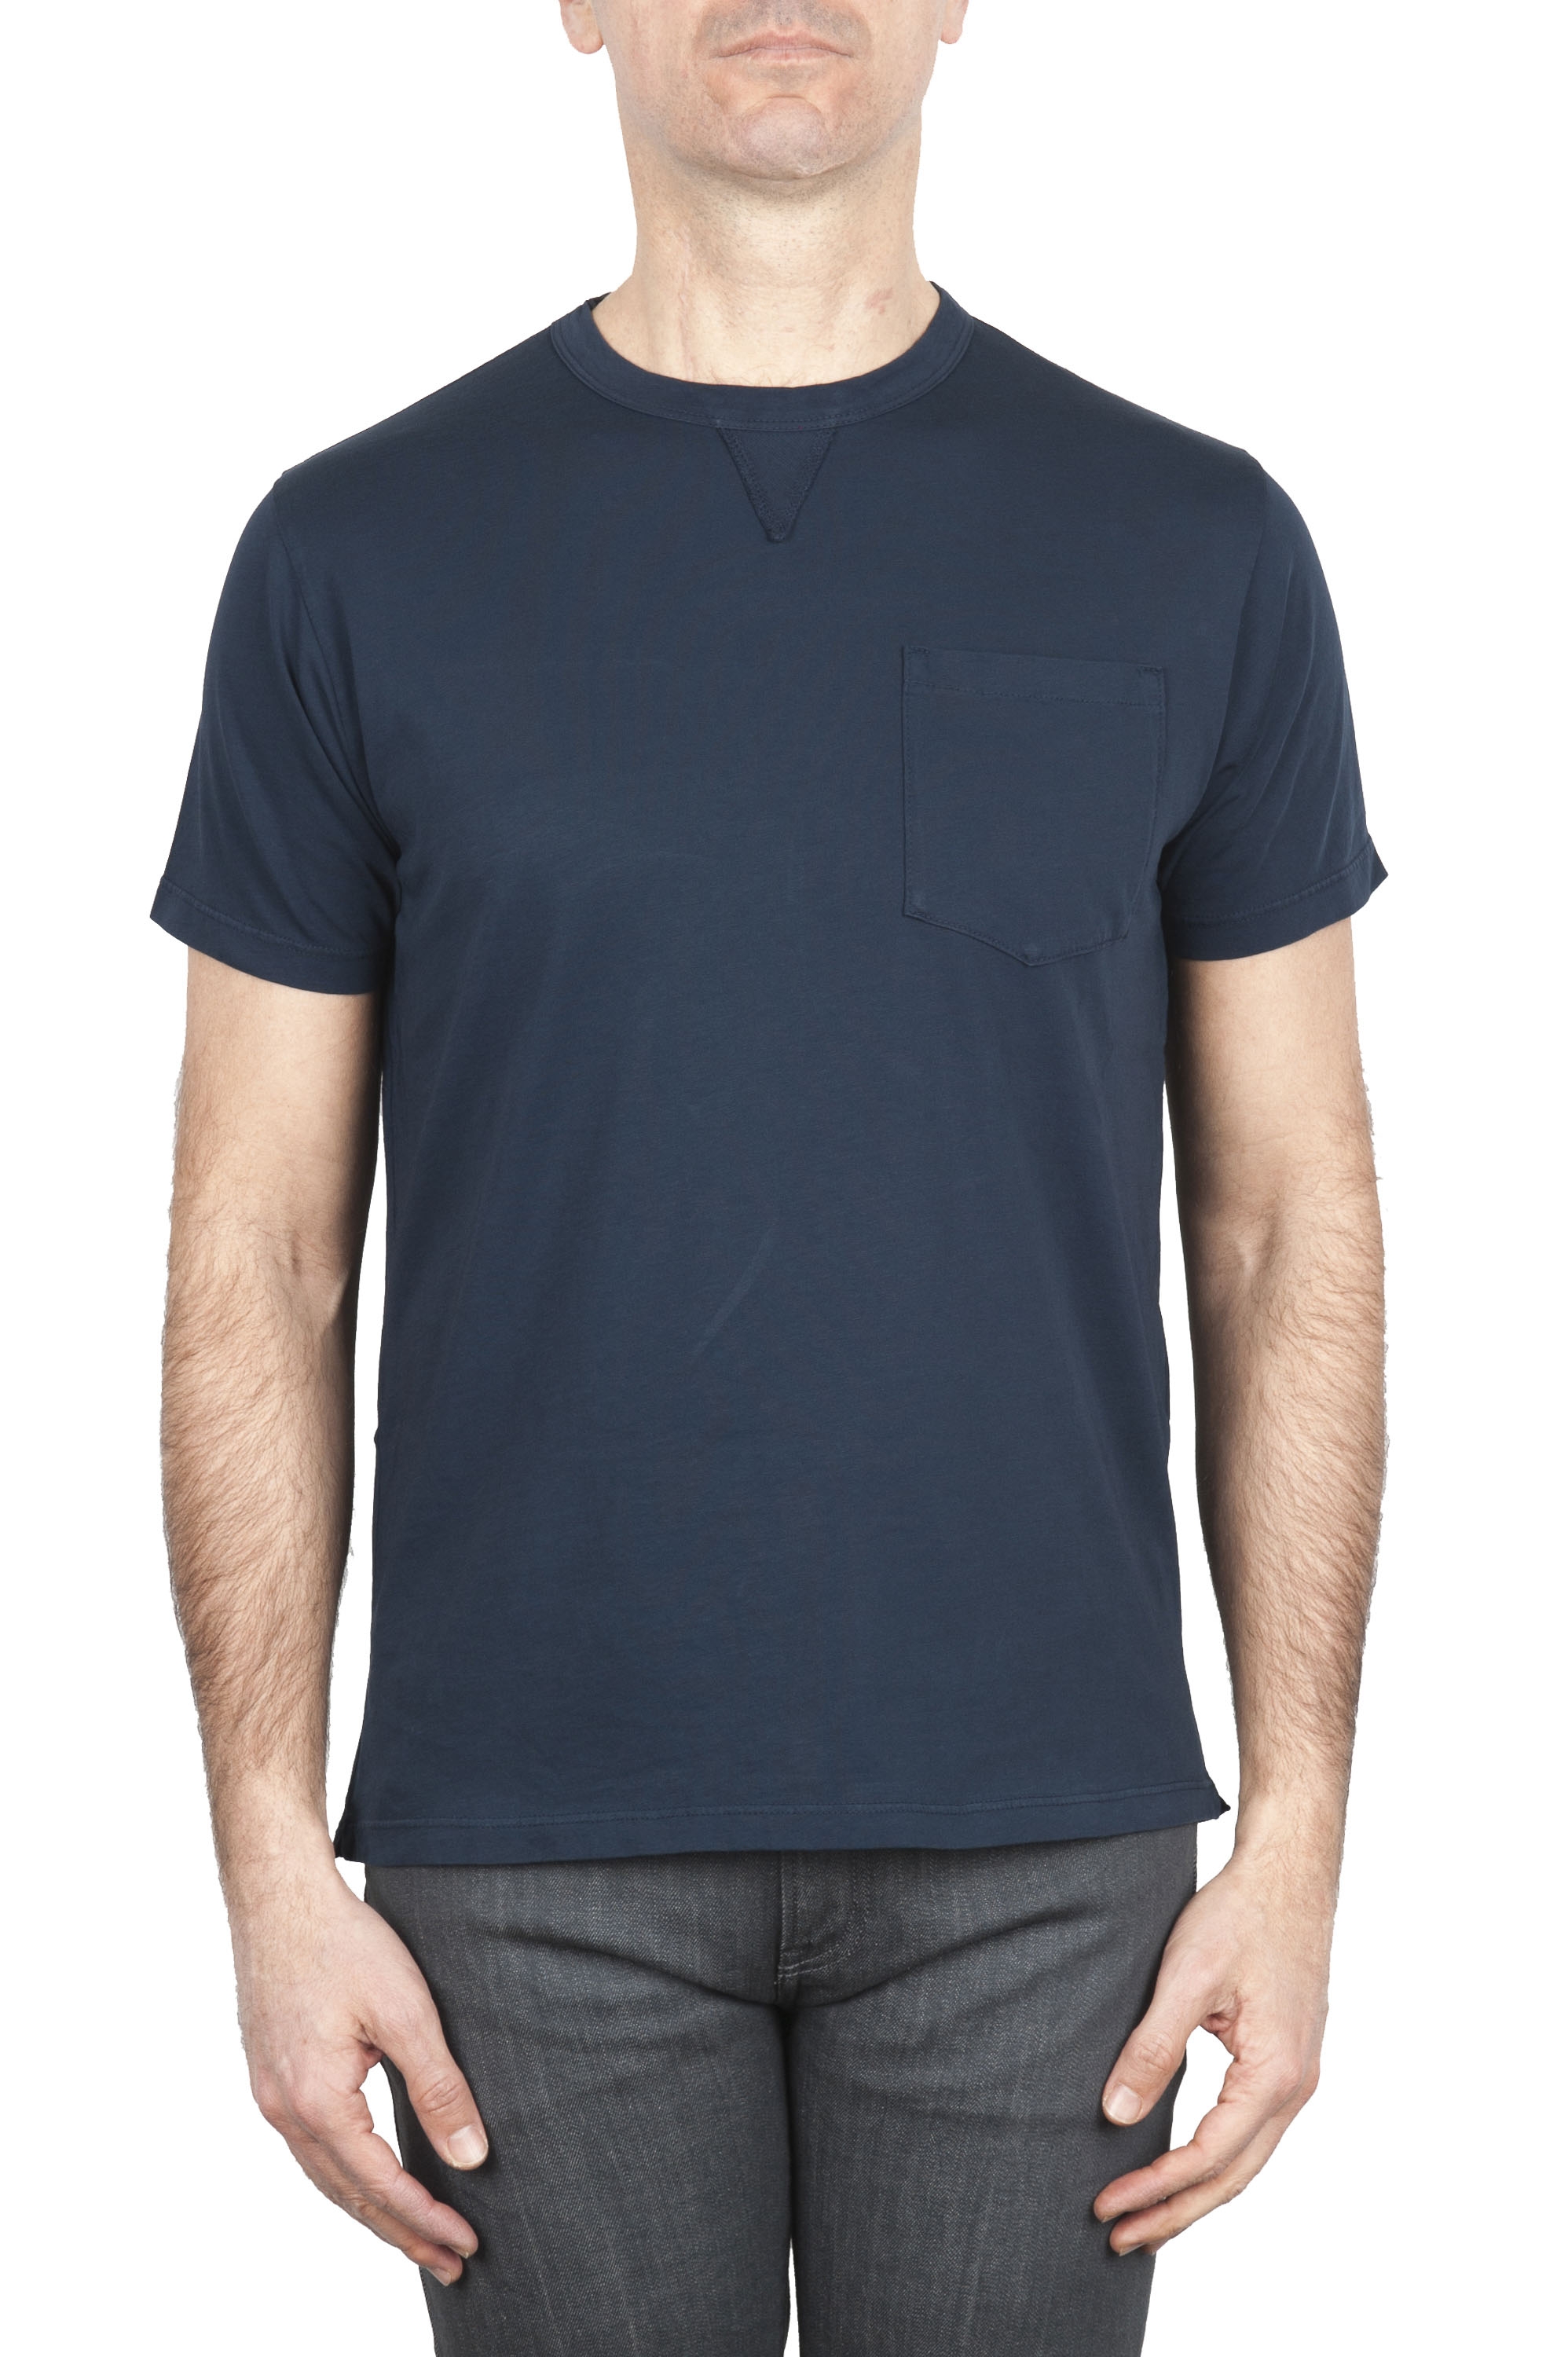 SBU 01656 Round neck patch pocket cotton t-shirt navy blue 01